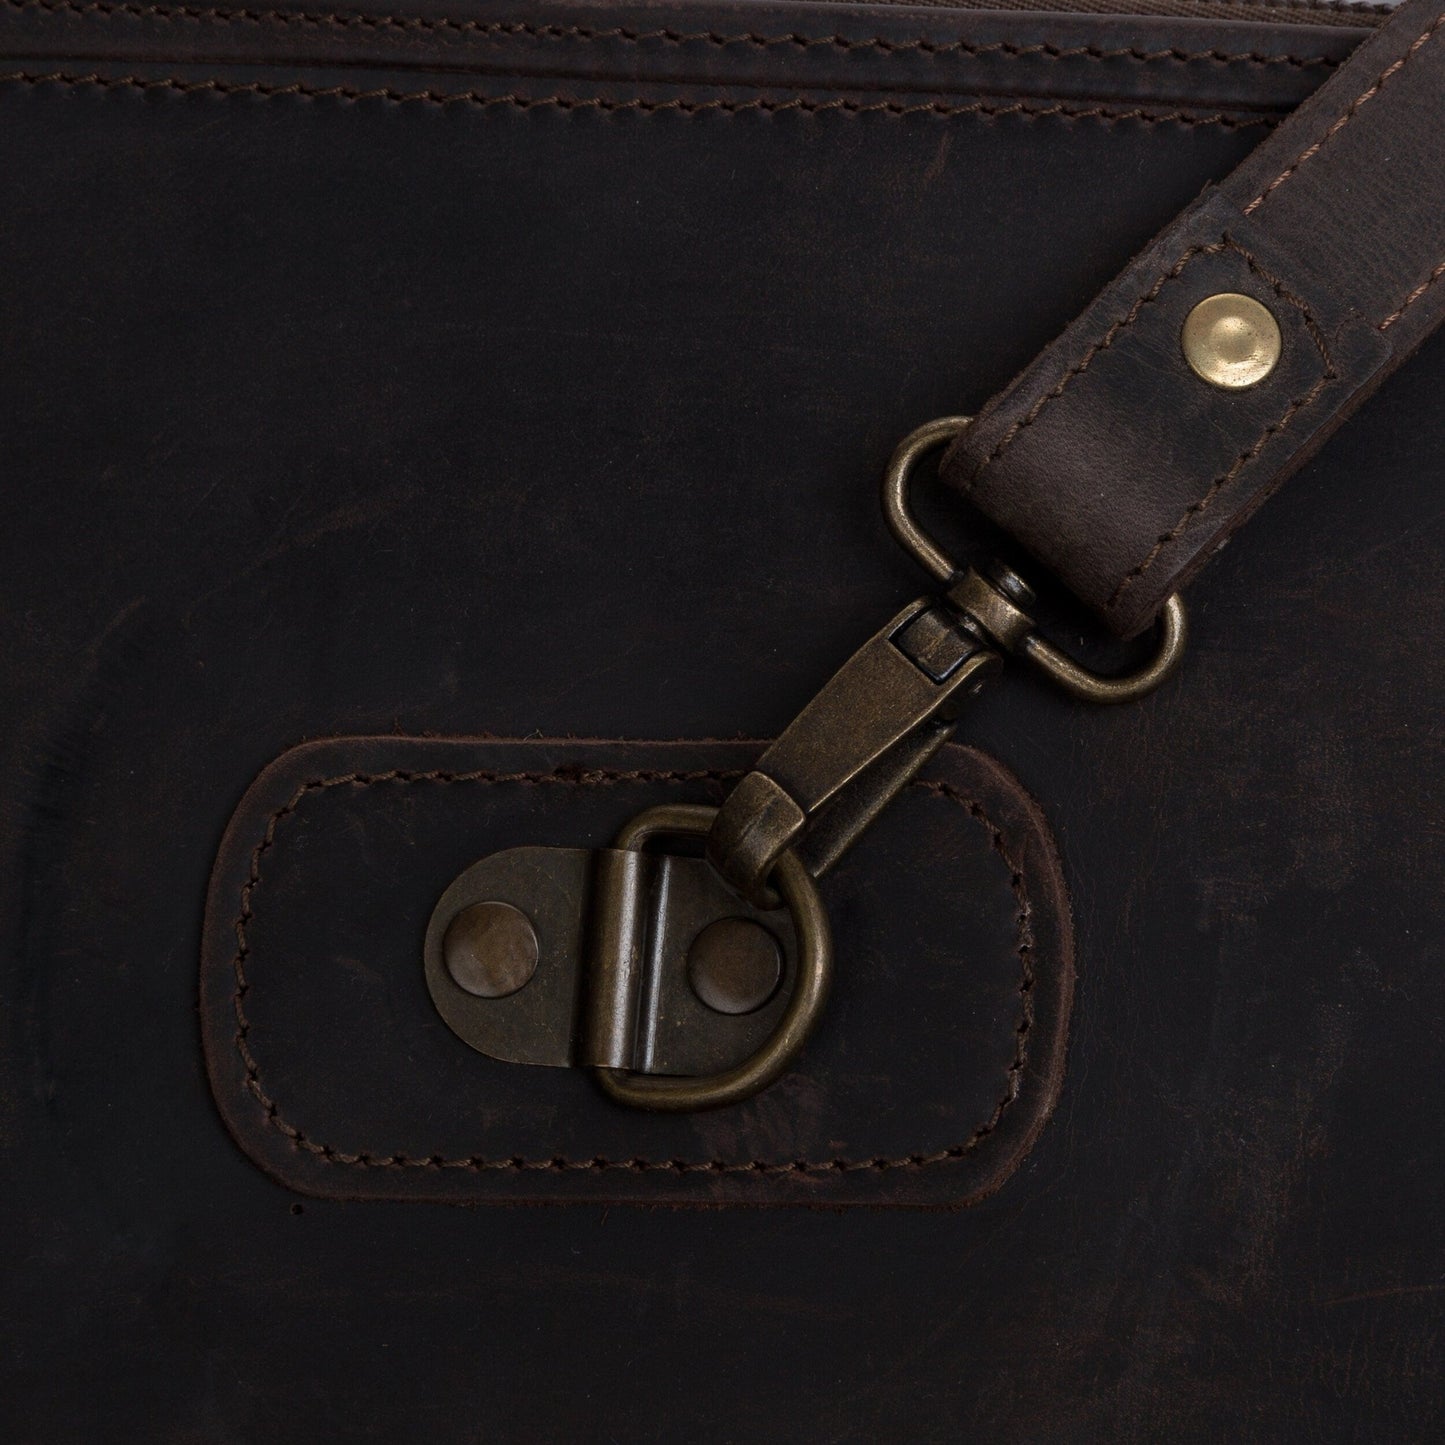 40 inch to 60 inch | Handmade | Leather Shotgun Bag | Leather Shotgun Case |  Hunting | Hunting Gear  |  Gun case  | Personalization  99percenthandmade   